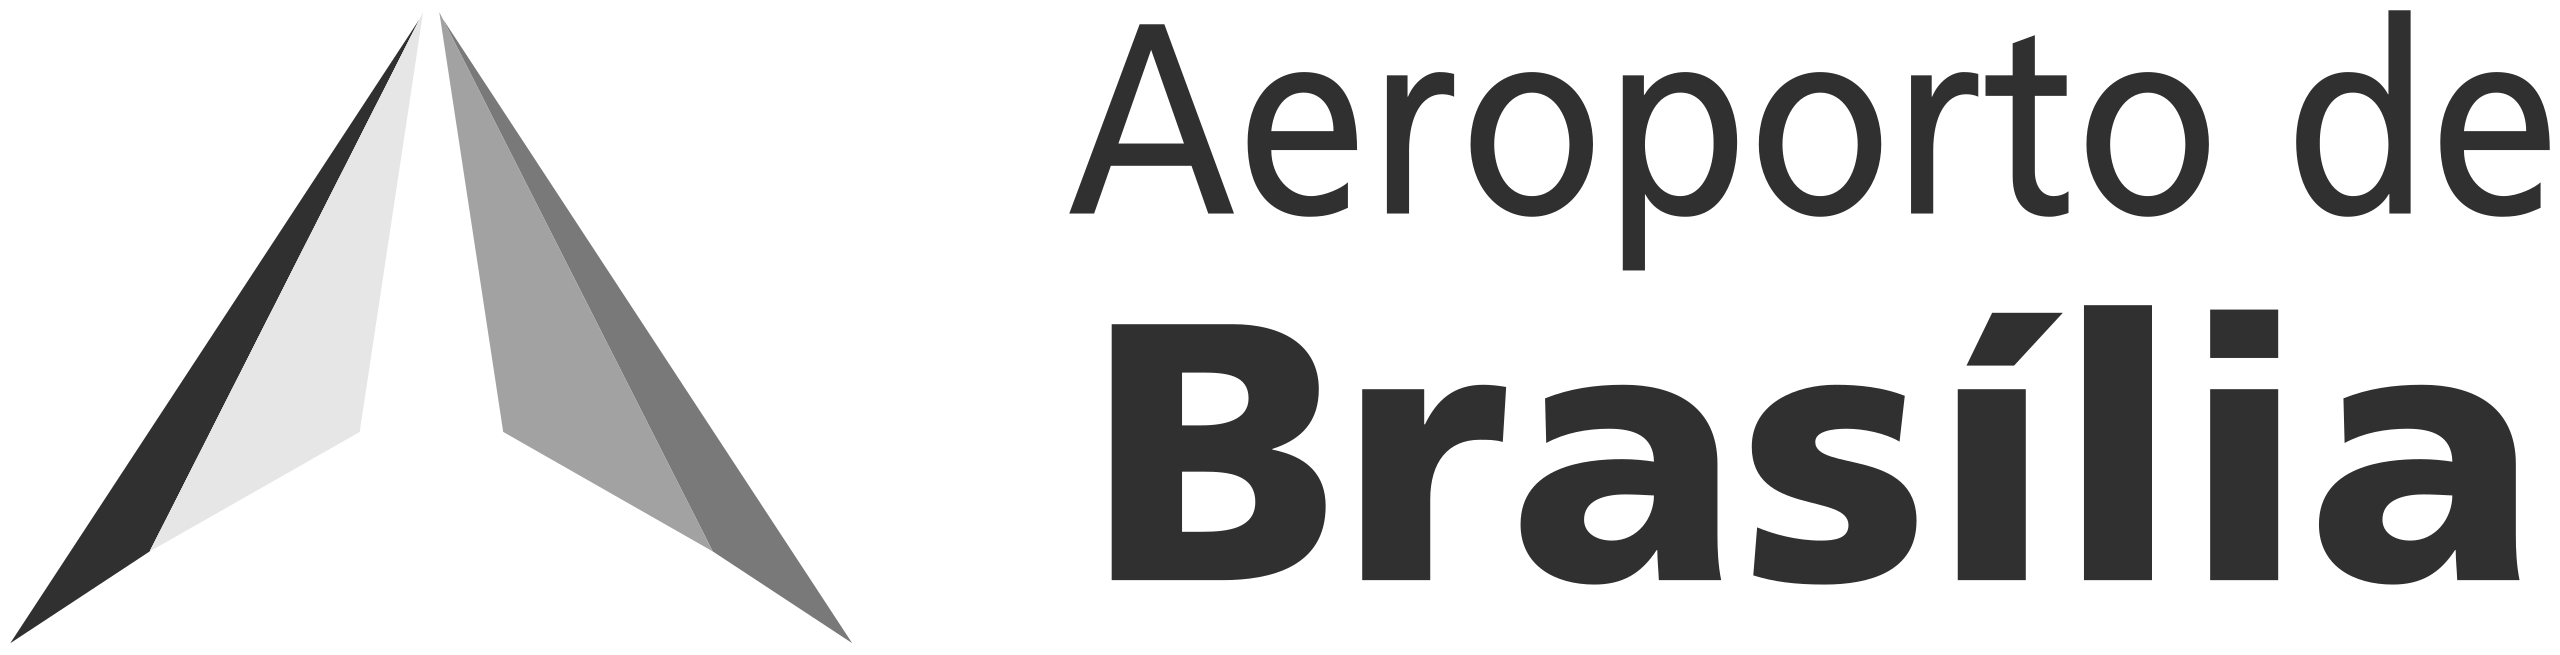 2560px-Aeroporto_do_Brasilia_logo.svg